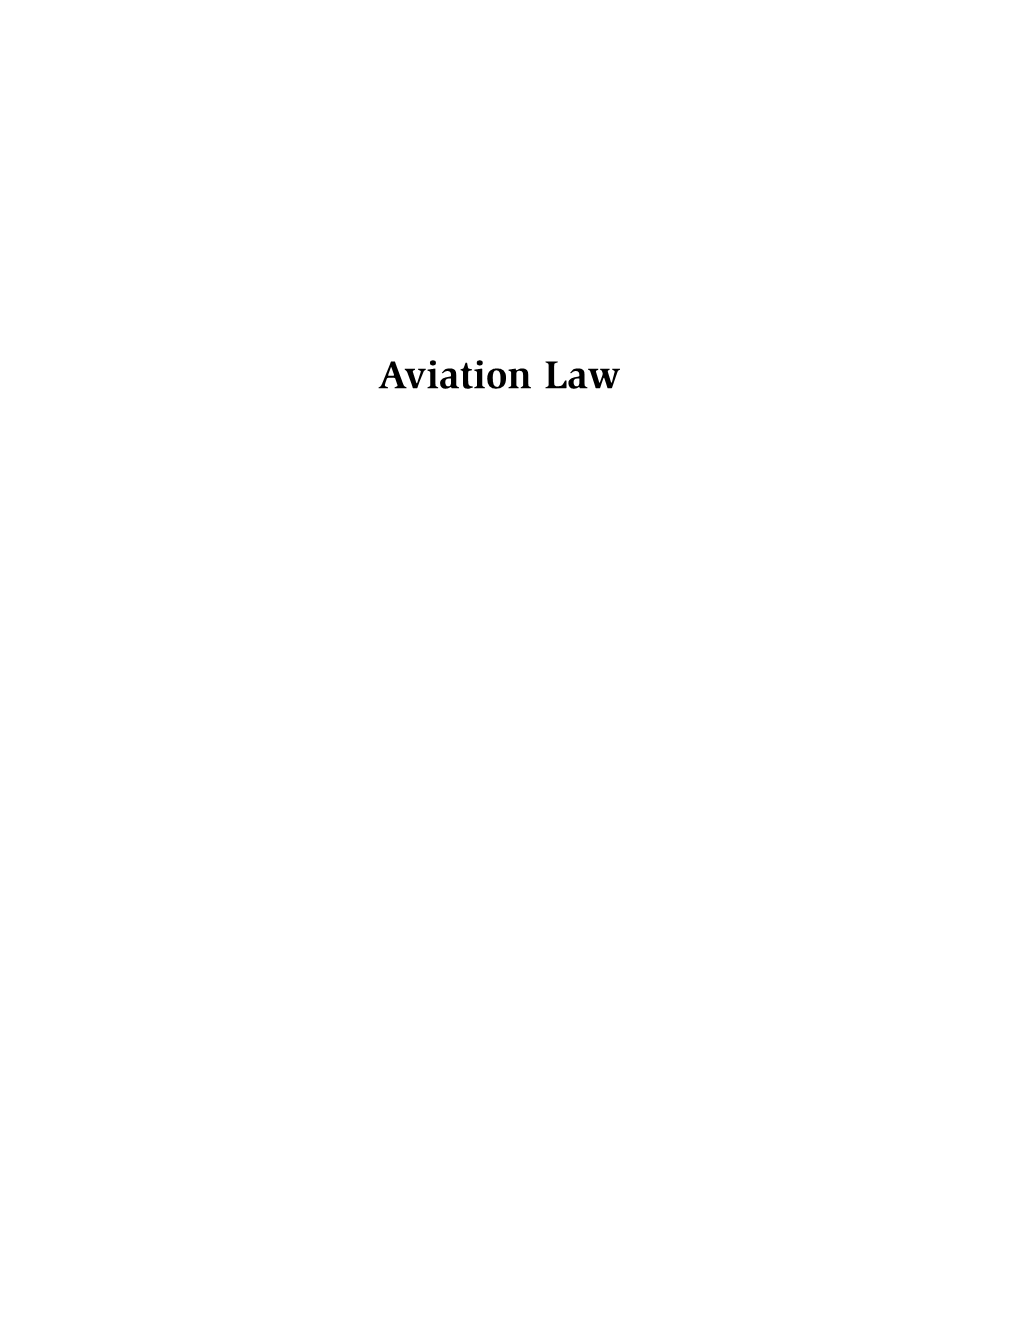 Aviation Law Carolina Academic Press Law Casebook Series Advisory Board ❦ Gary J